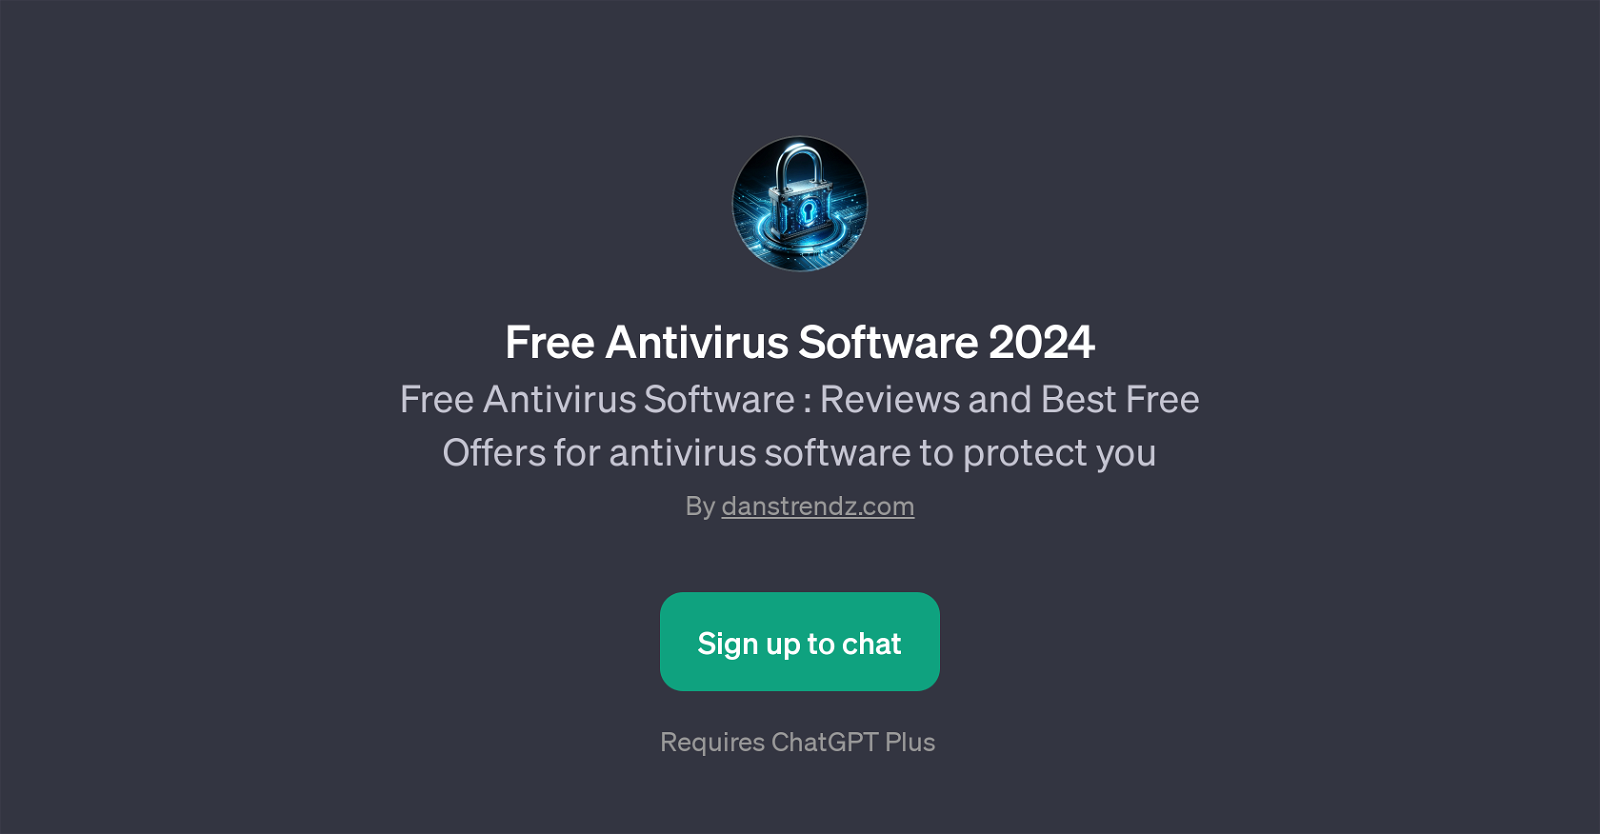 Free Antivirus Software 2024 website